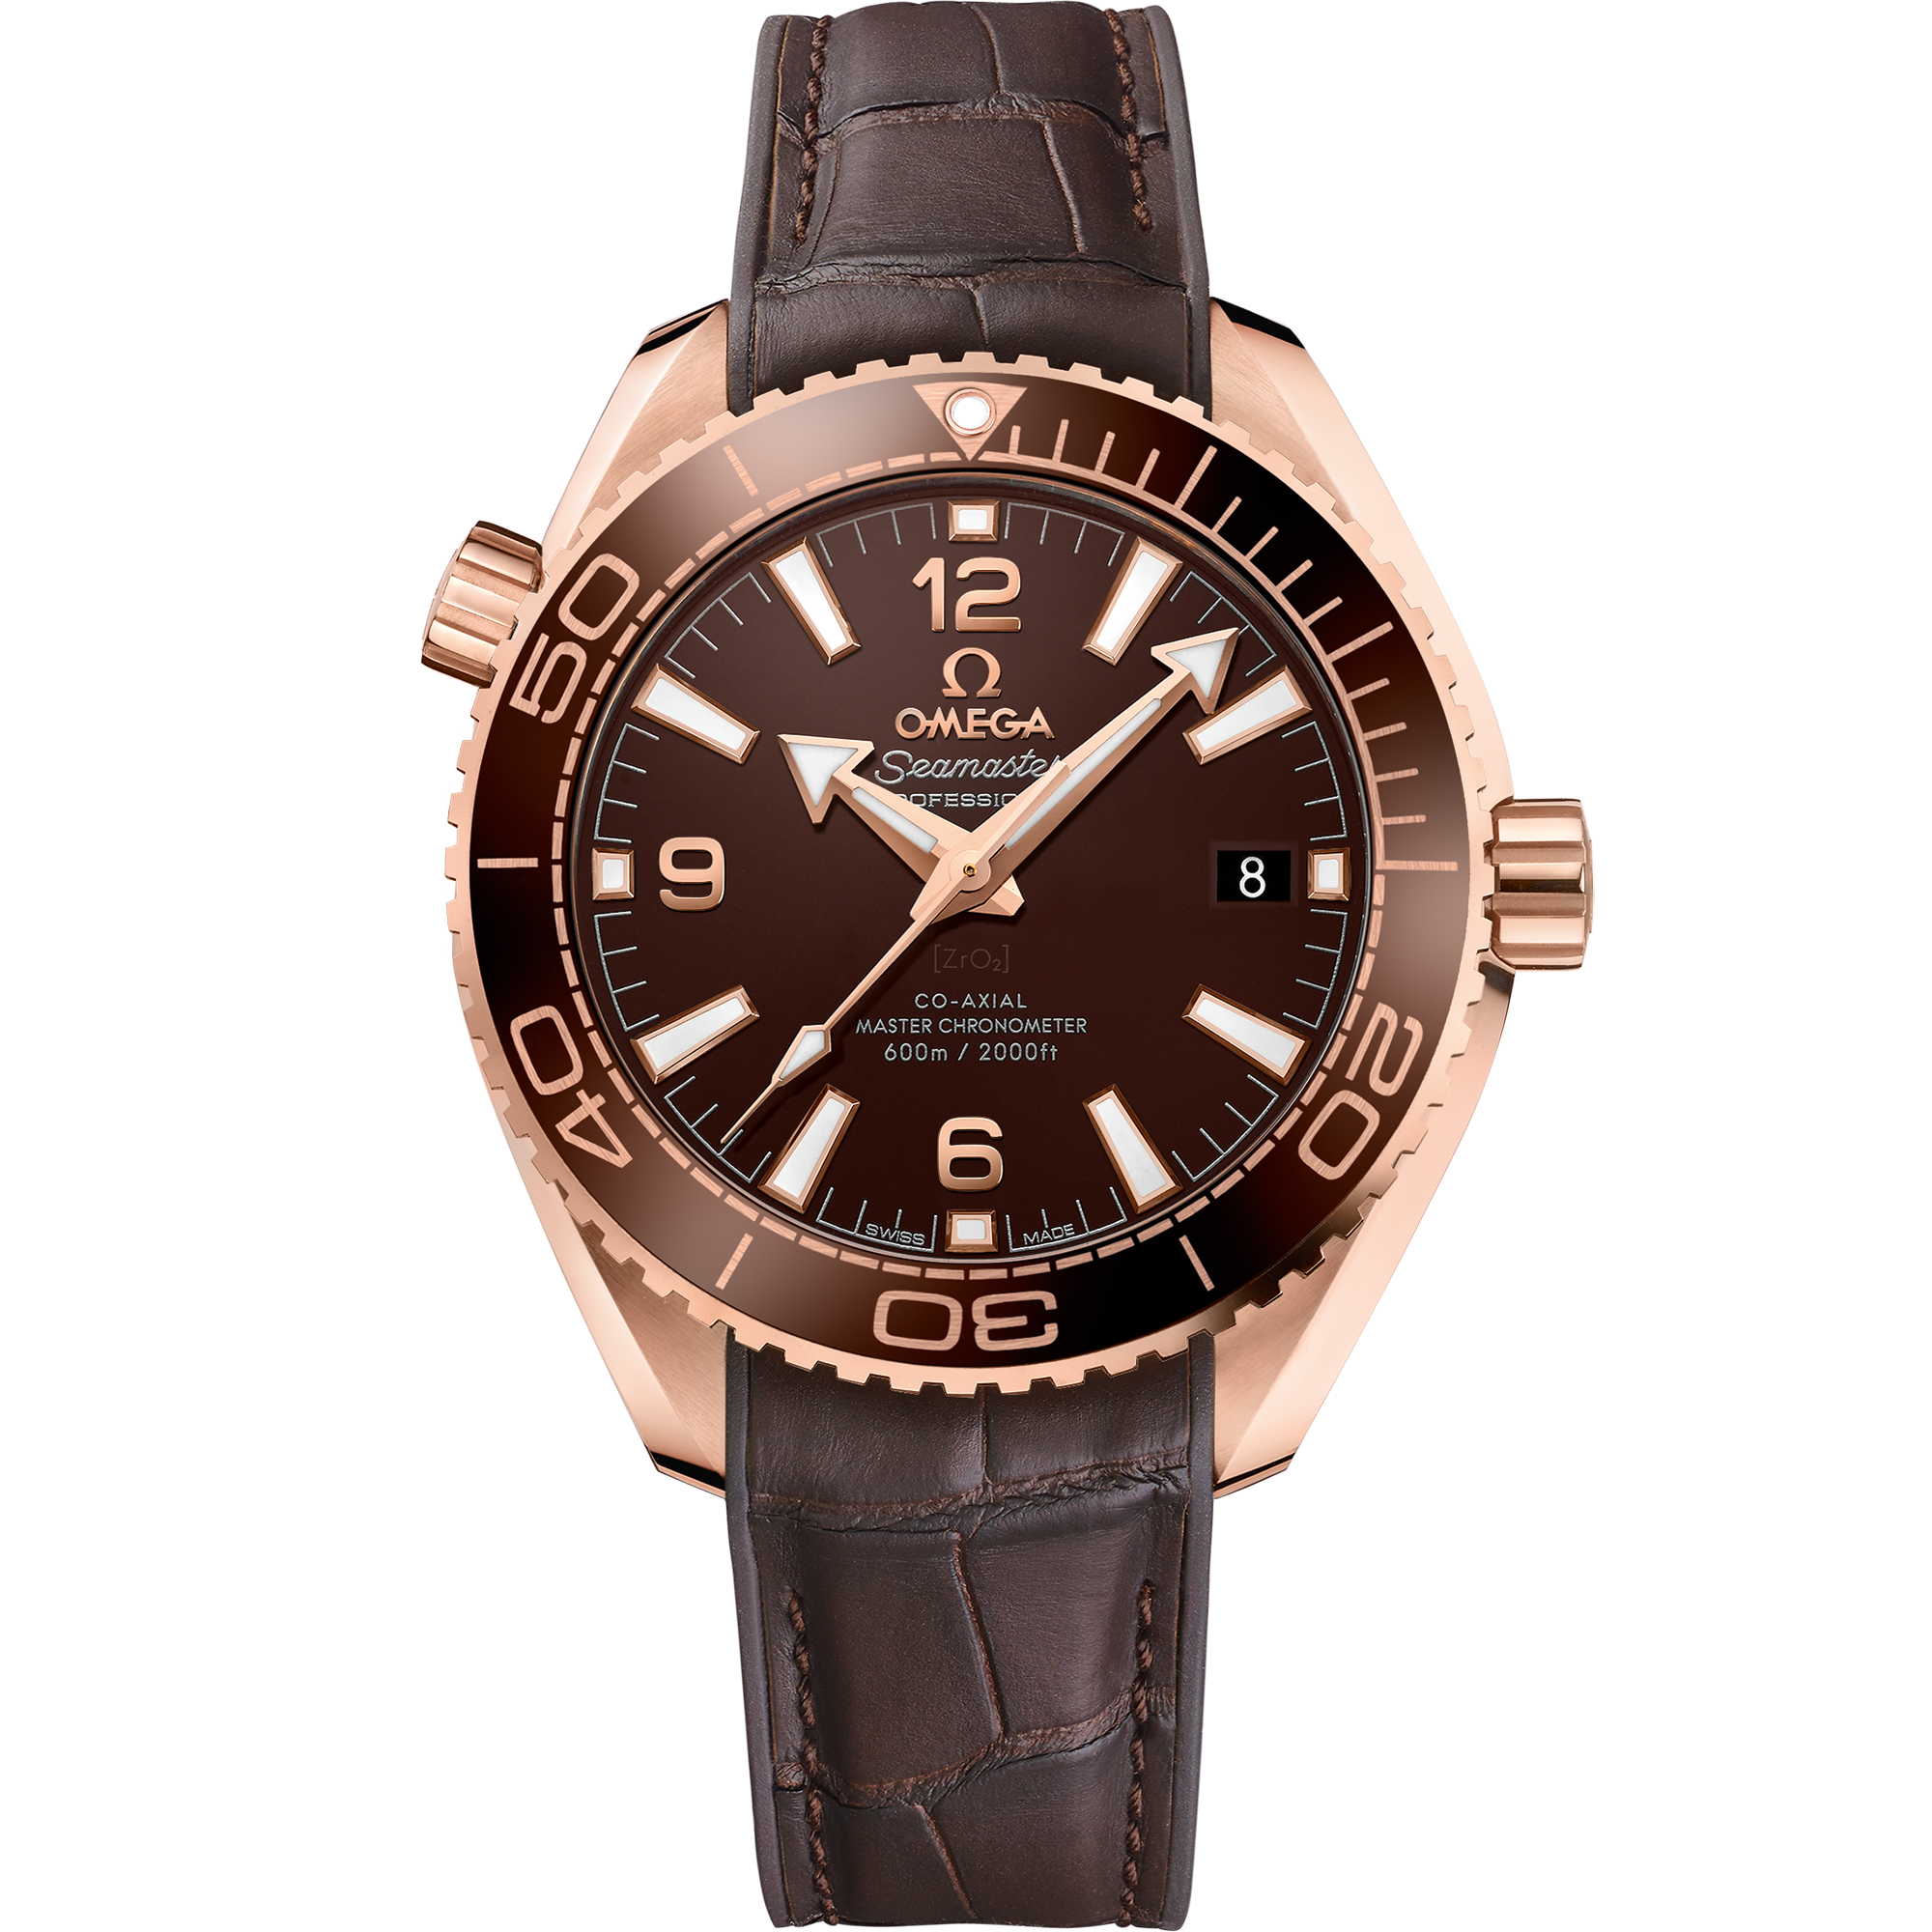 Planet Ocean 600M Seamaster Brown ceramic Chronometer Watch  215.62.40.20.13.001 | OMEGA US®